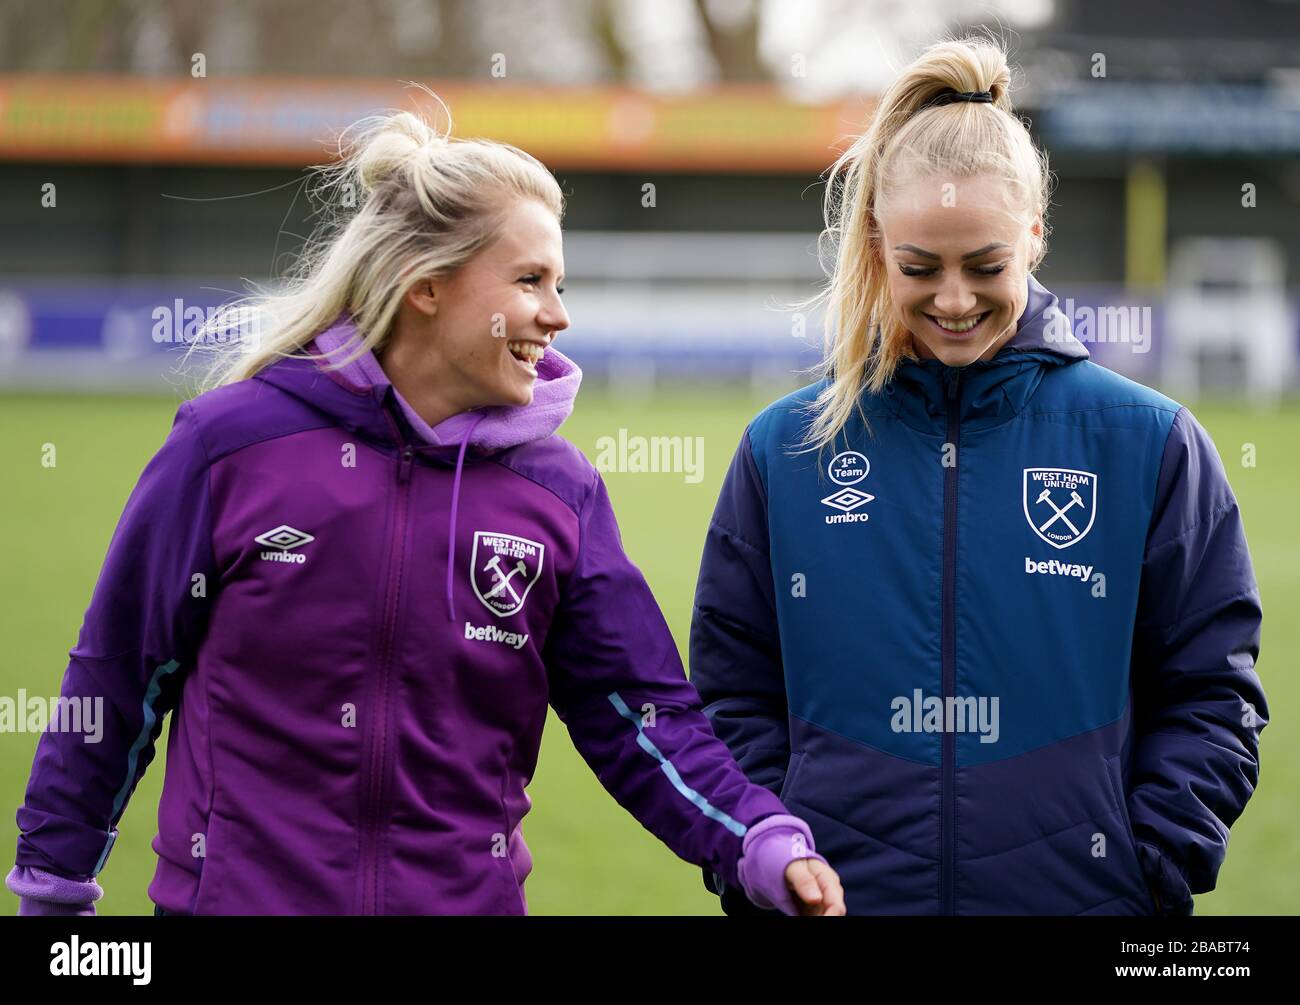 West Ham United's Julia Simic (left) and Alisha Lehmann before the match at Kingsmeadow Stock Photo